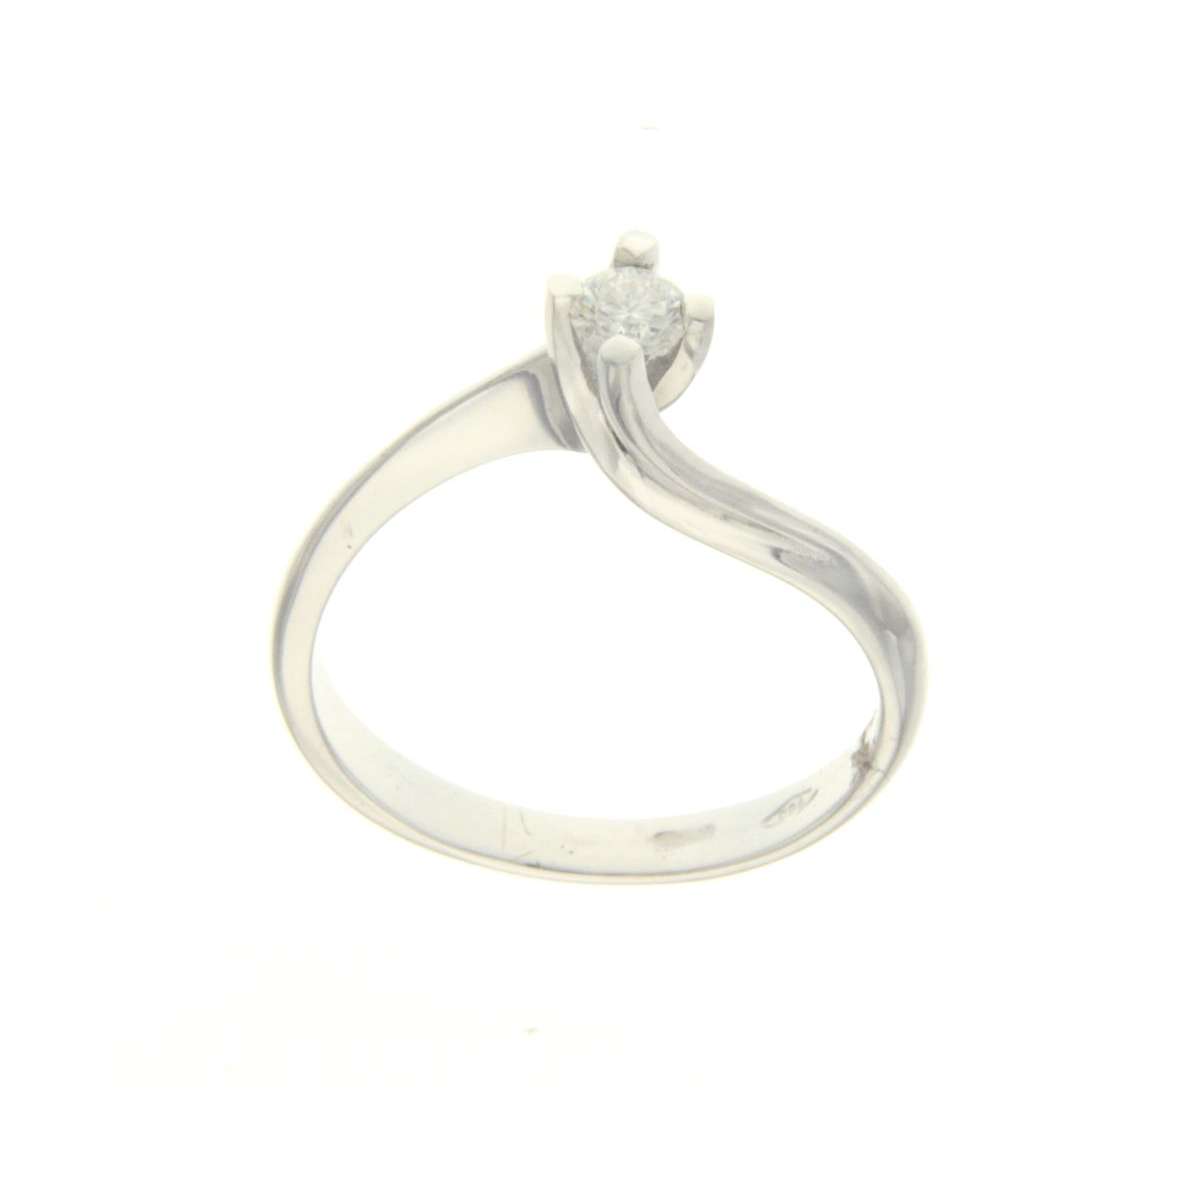 Valentino Solitaire white gold ring 0.18 carats diamond G-VS1